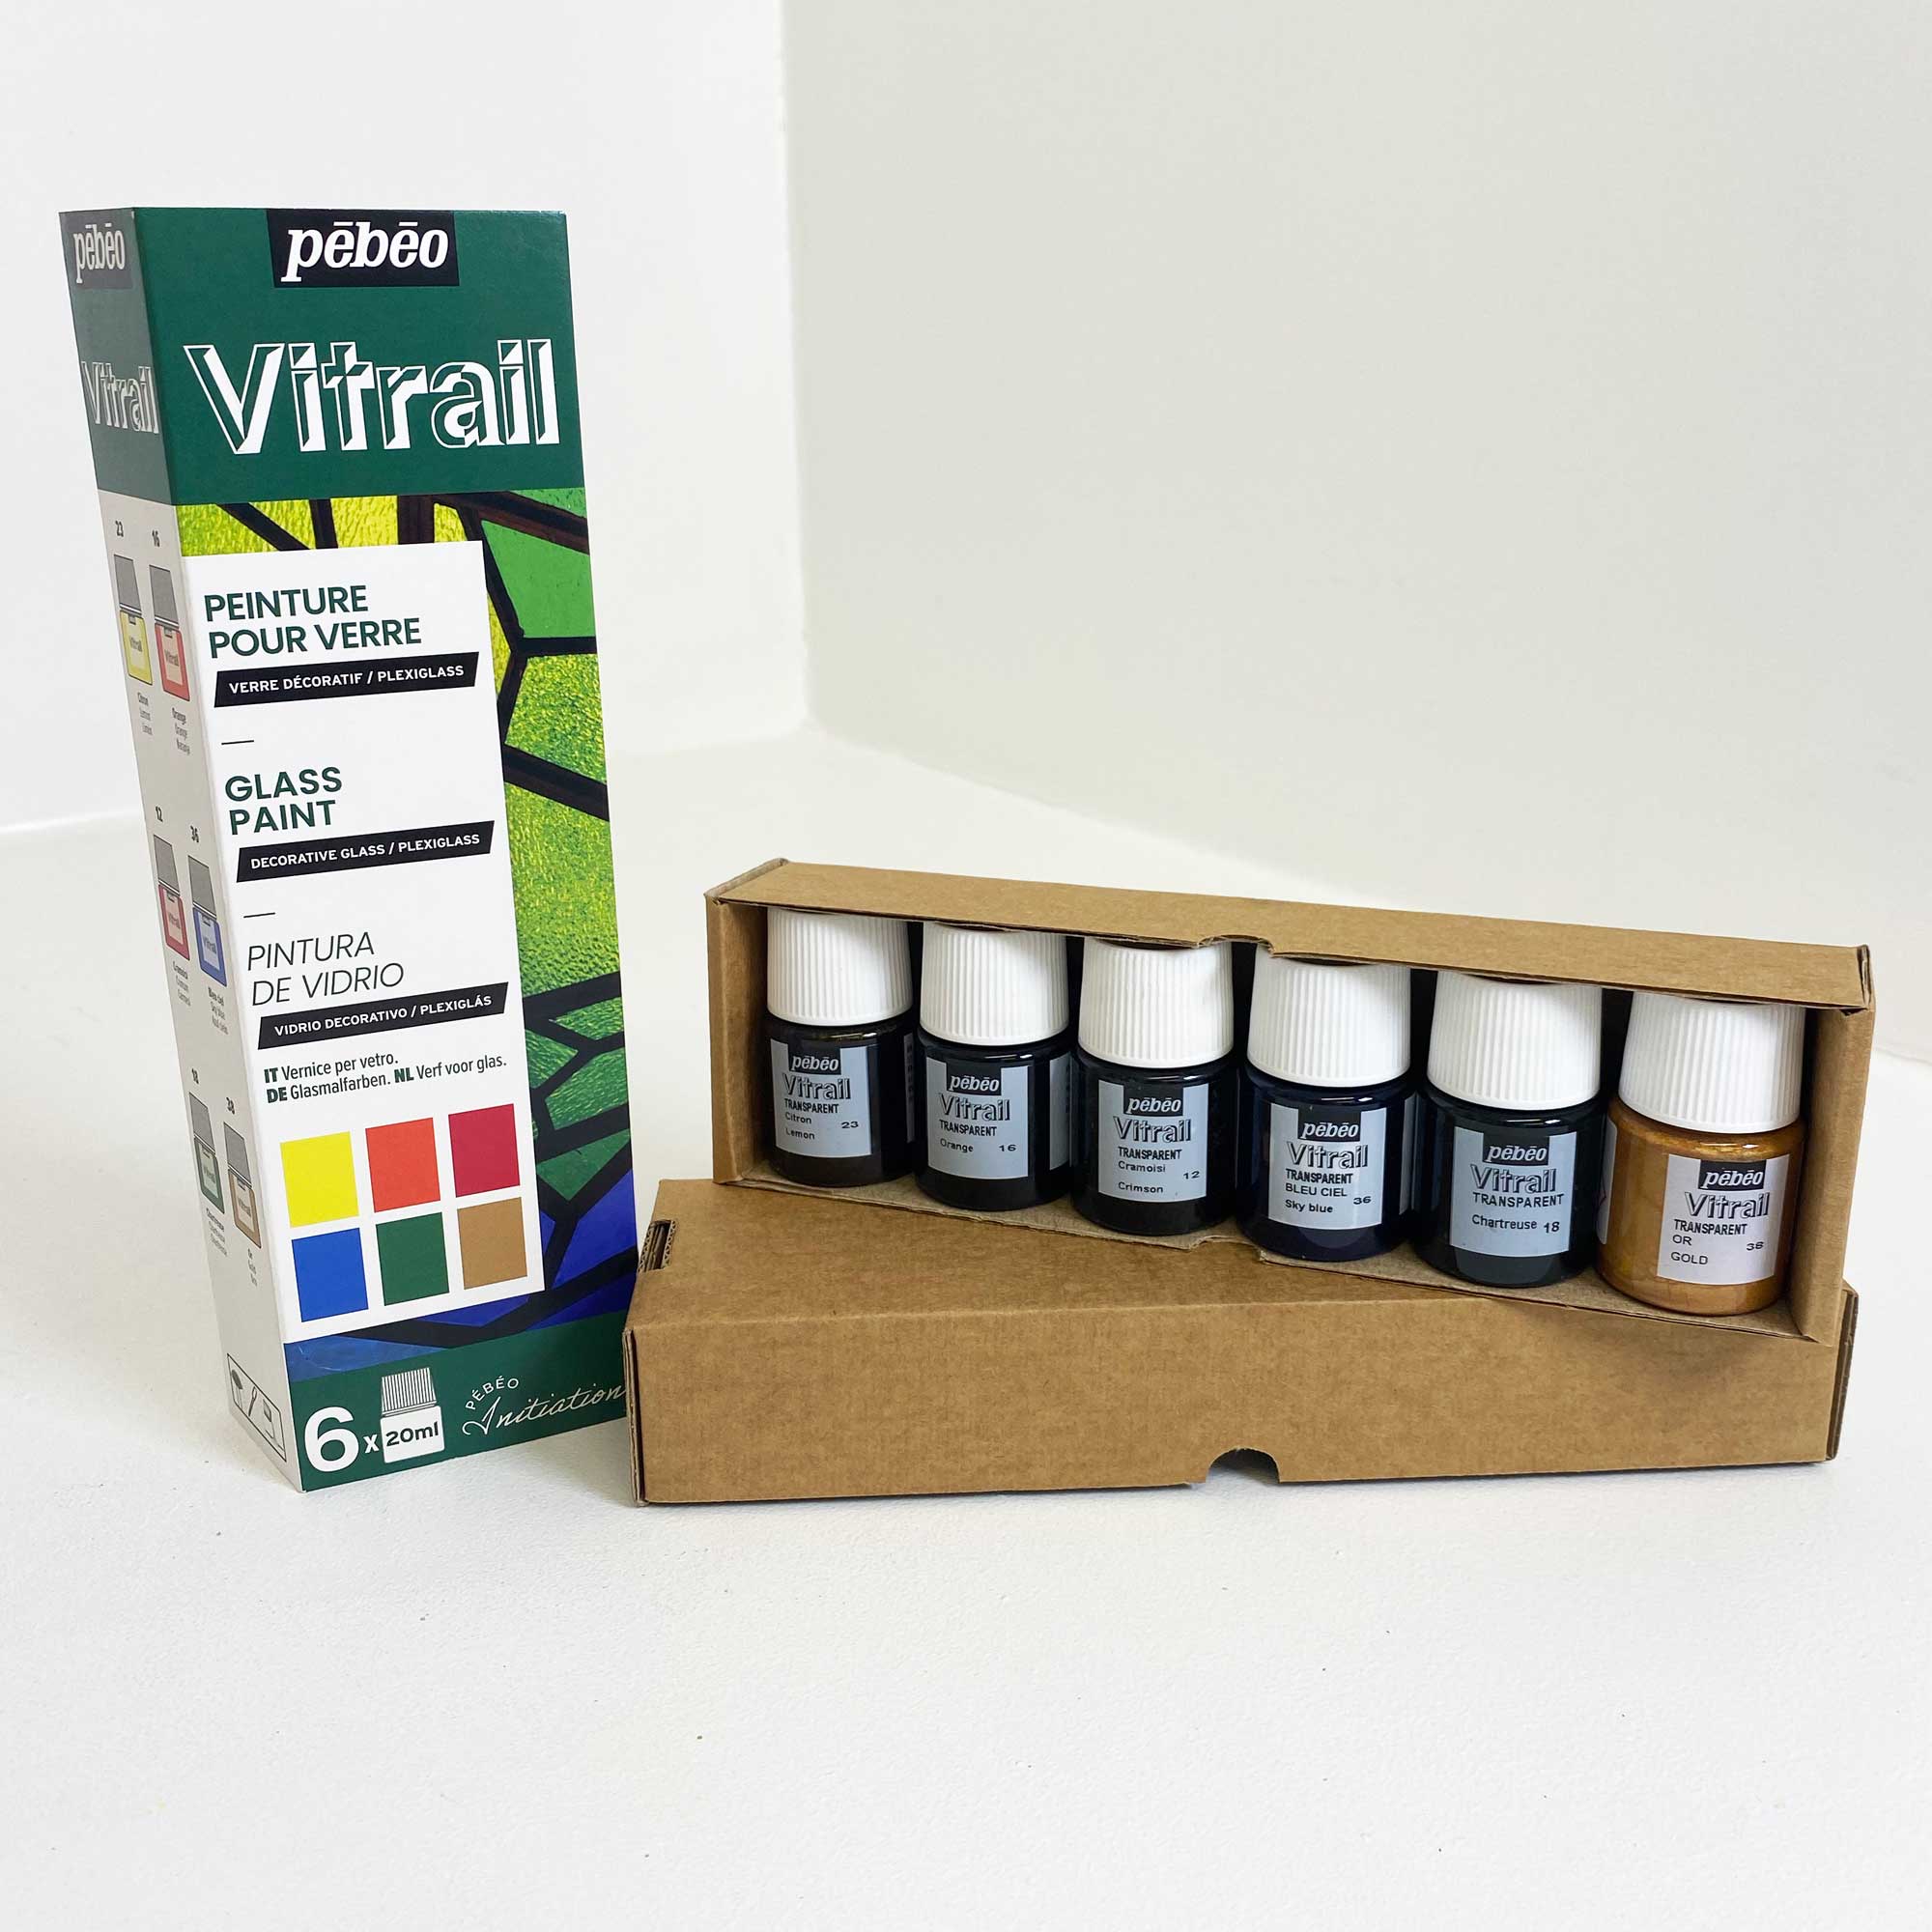 Vitrail Initiation Glass Paint Set 6 x 20ml